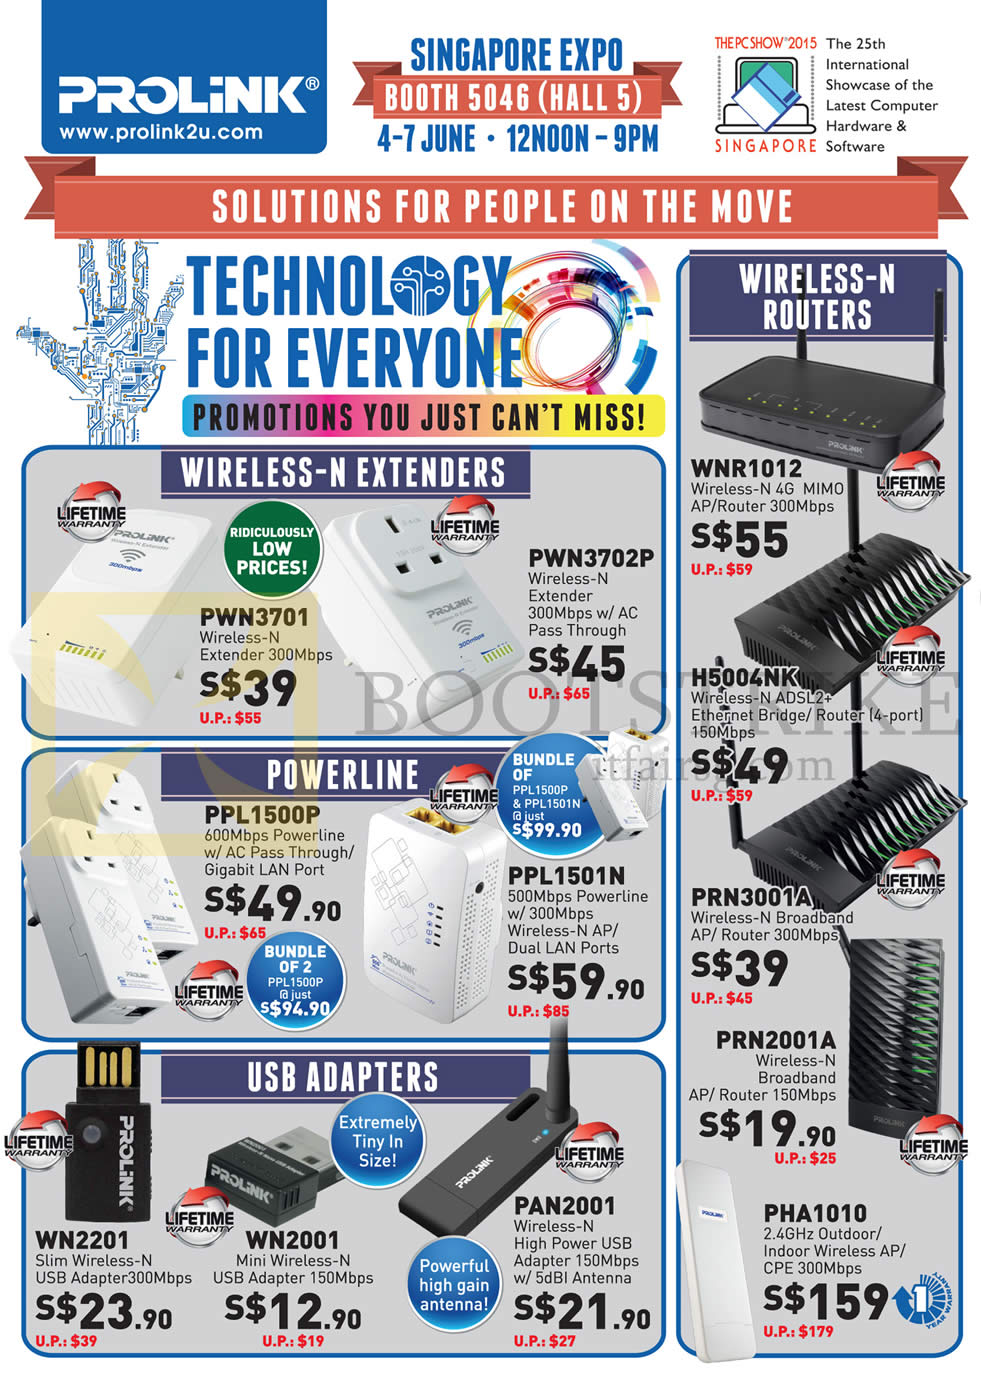 PC SHOW 2015 price list image brochure of Prolink Wireless-N Extenders, Powerline, USB Adapters, Wireless-N Routers